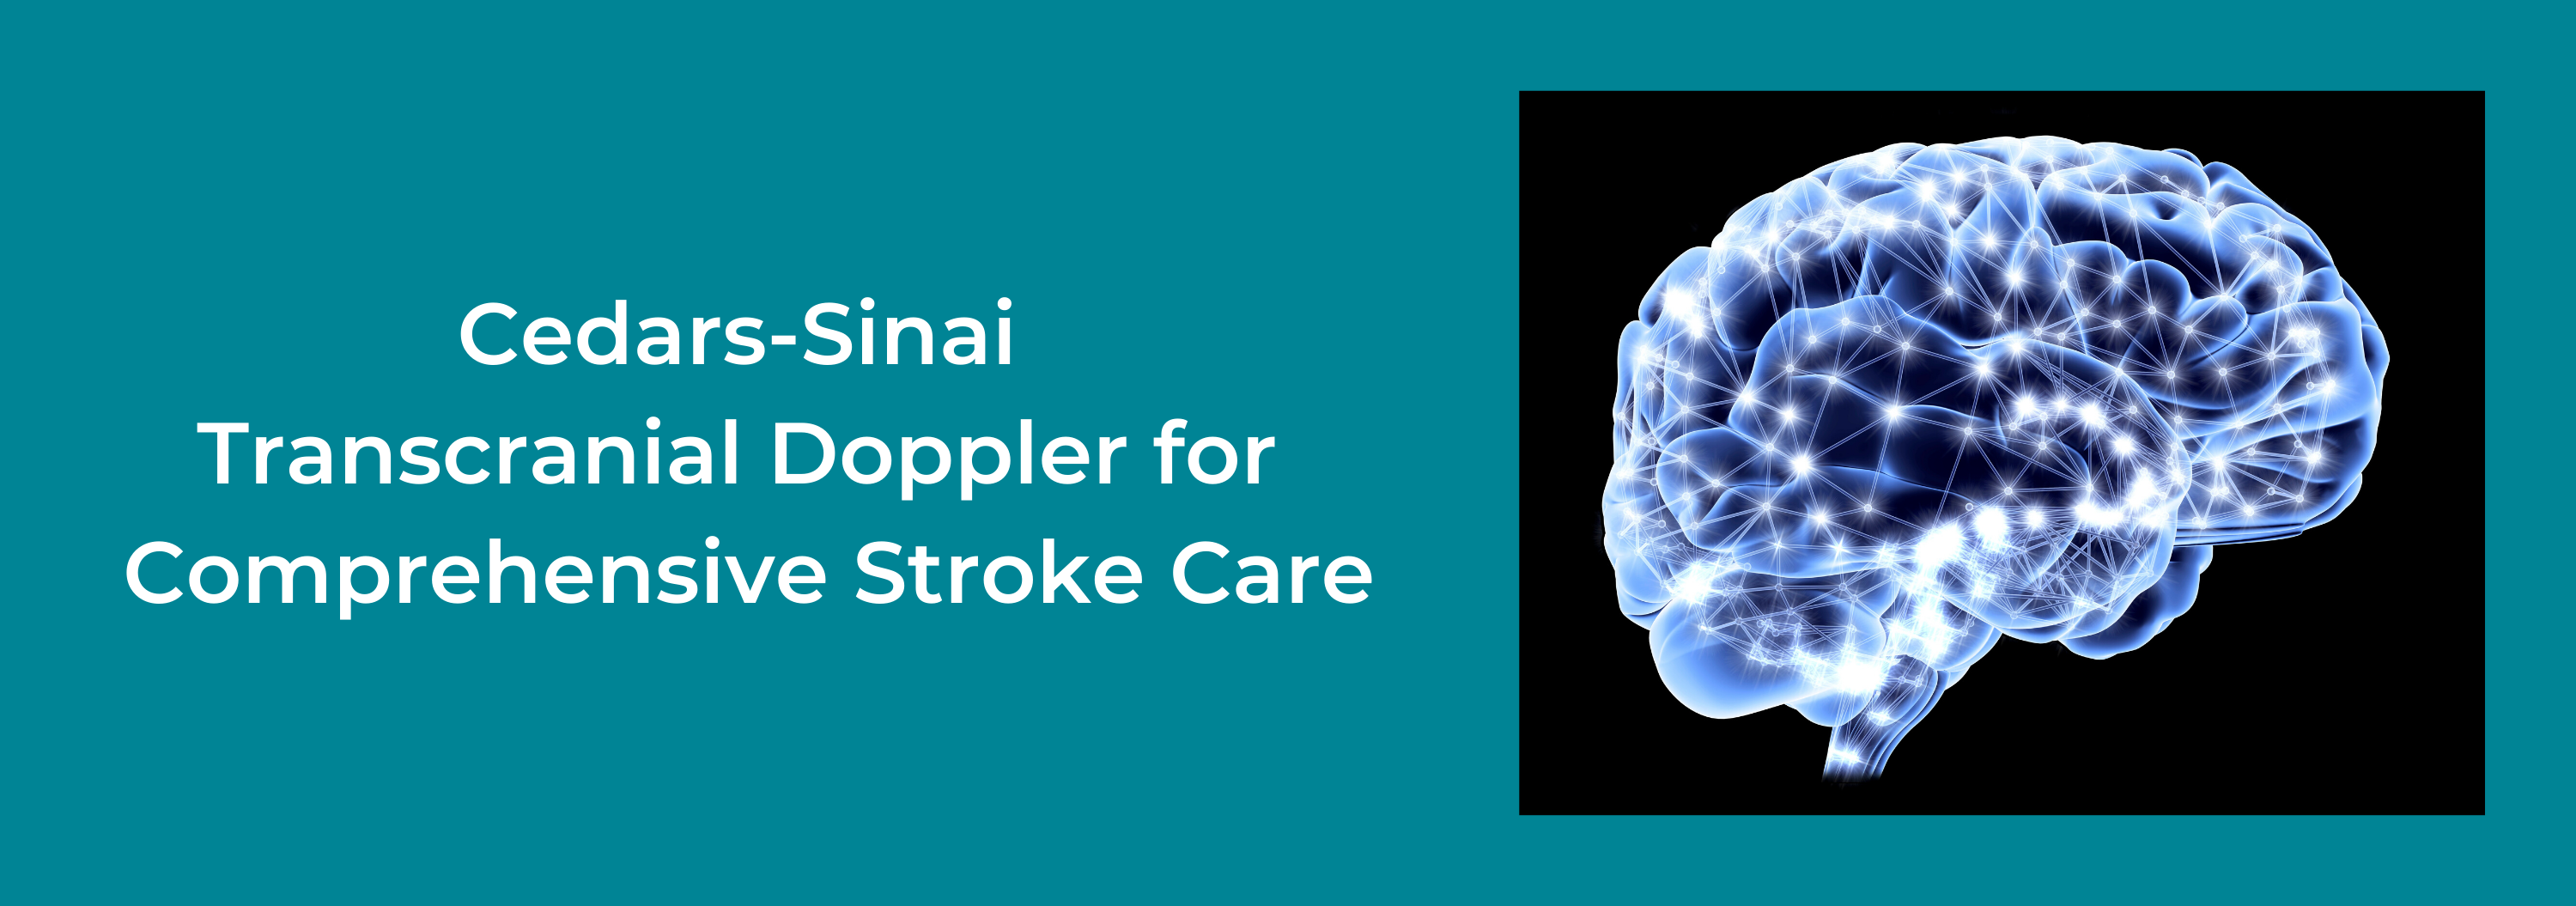 POSTPONED-2020 Cedars-Sinai Transcranial Doppler for Comprehensive Stroke Care Banner